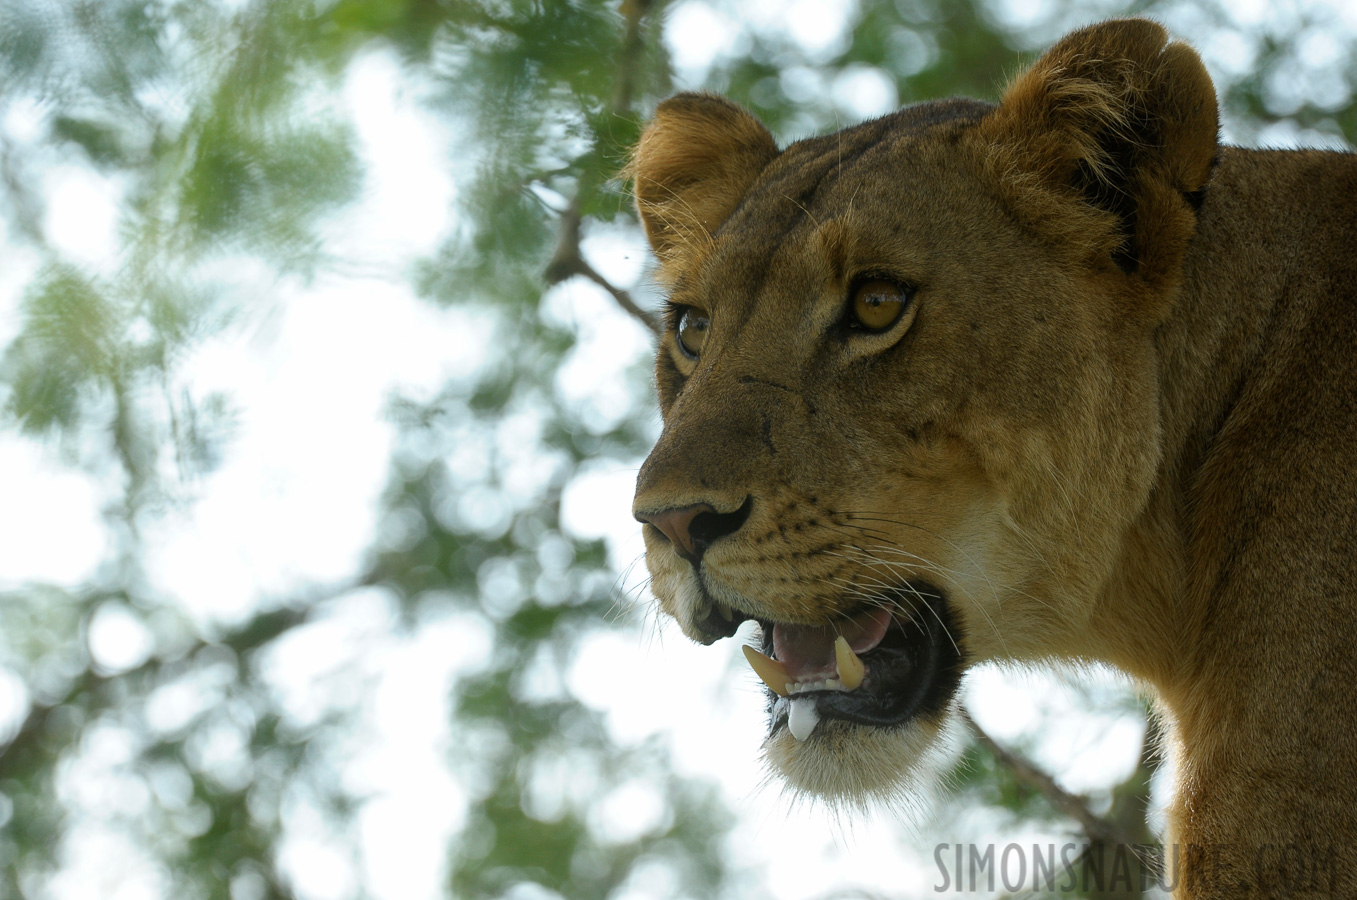 Panthera leo leo [400 mm, 1/400 sec at f / 9.0, ISO 800]